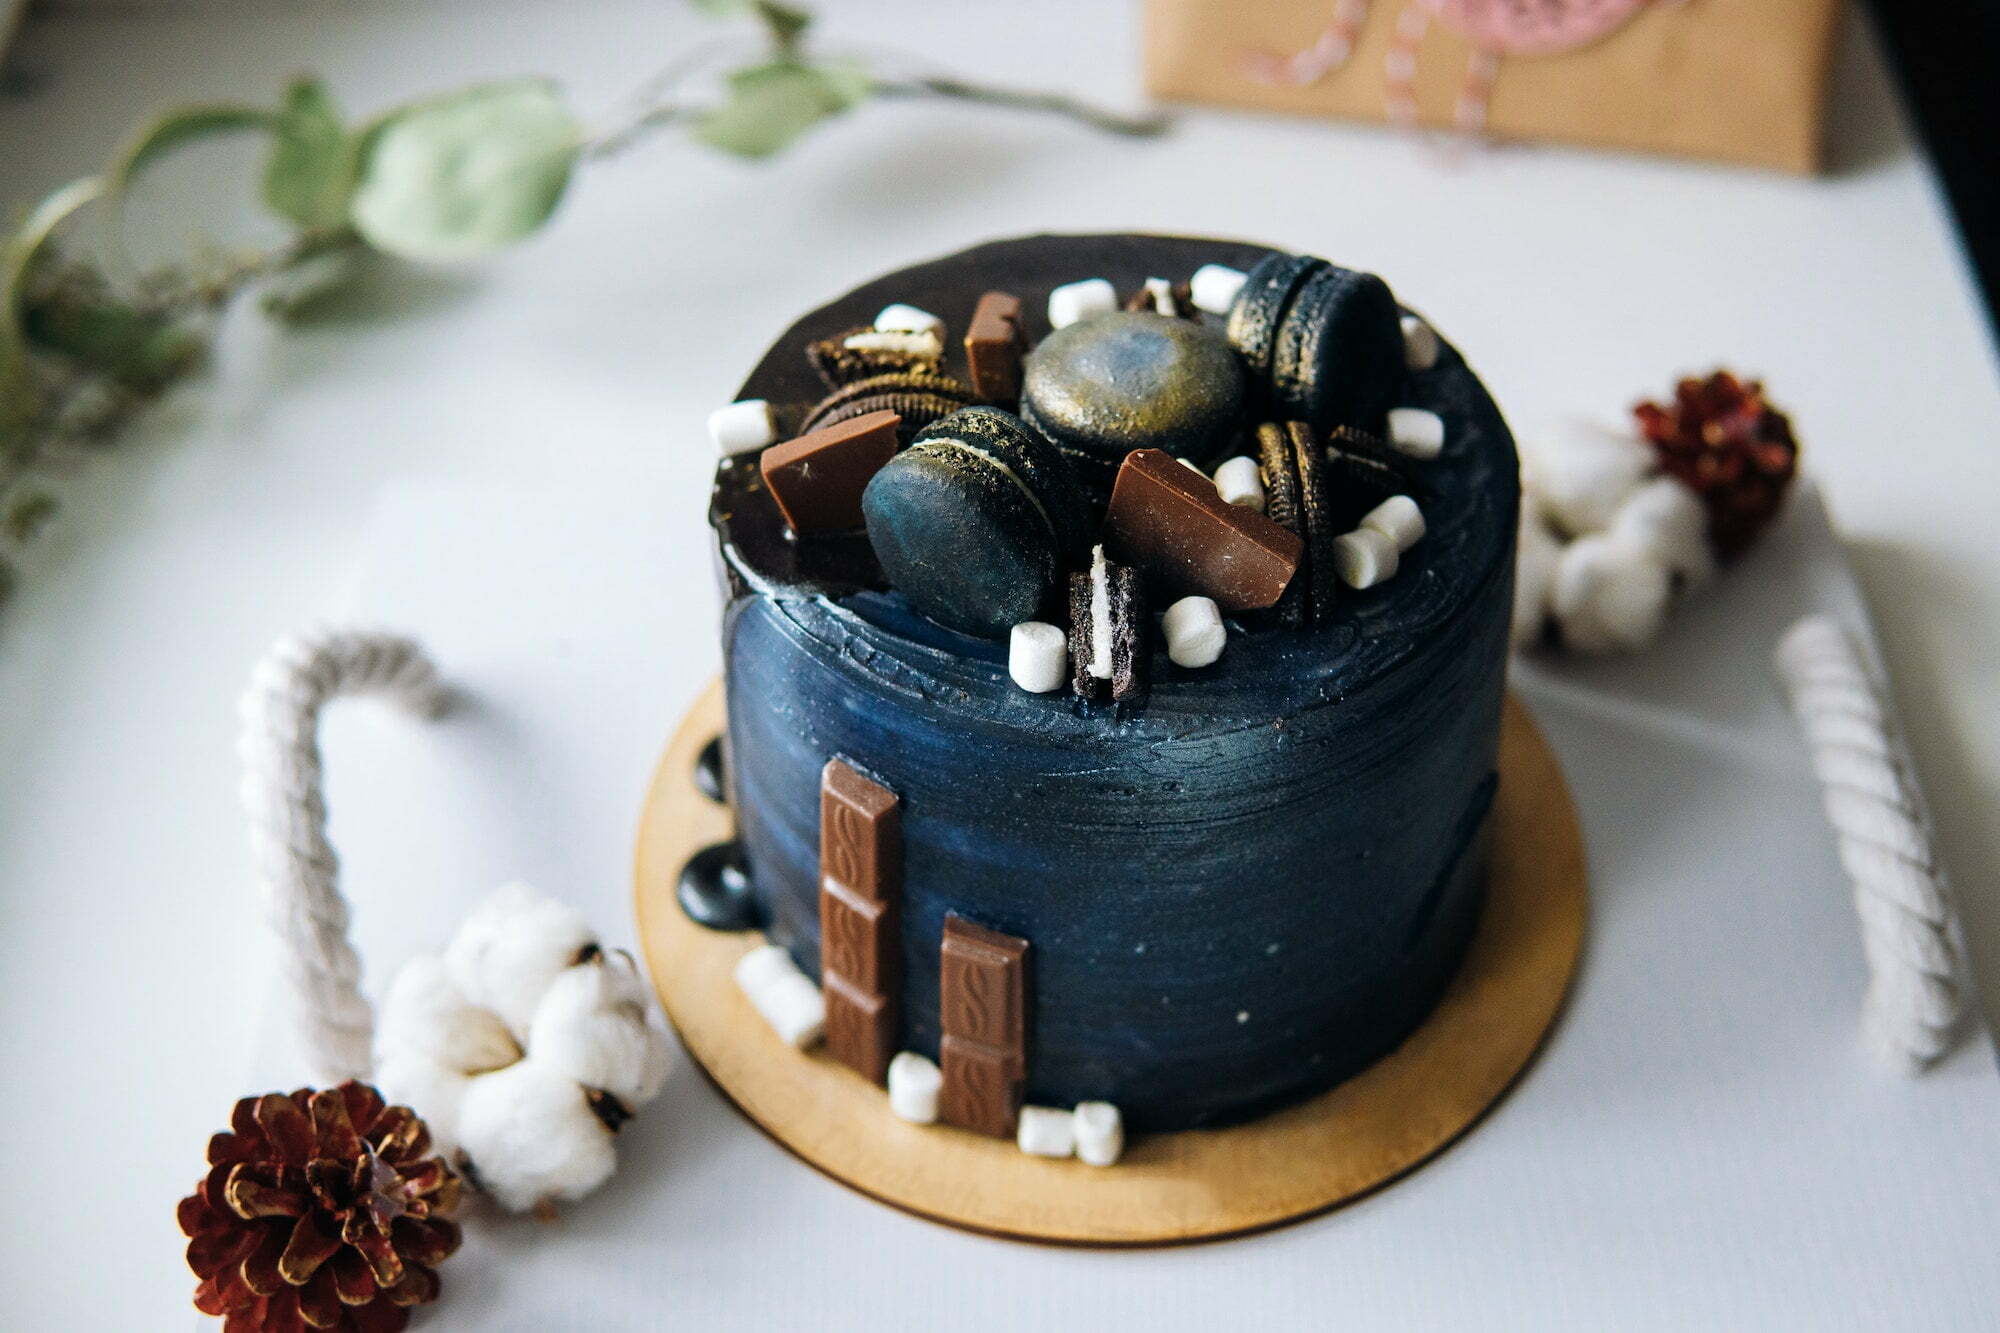 beautiful designer chocolate cake